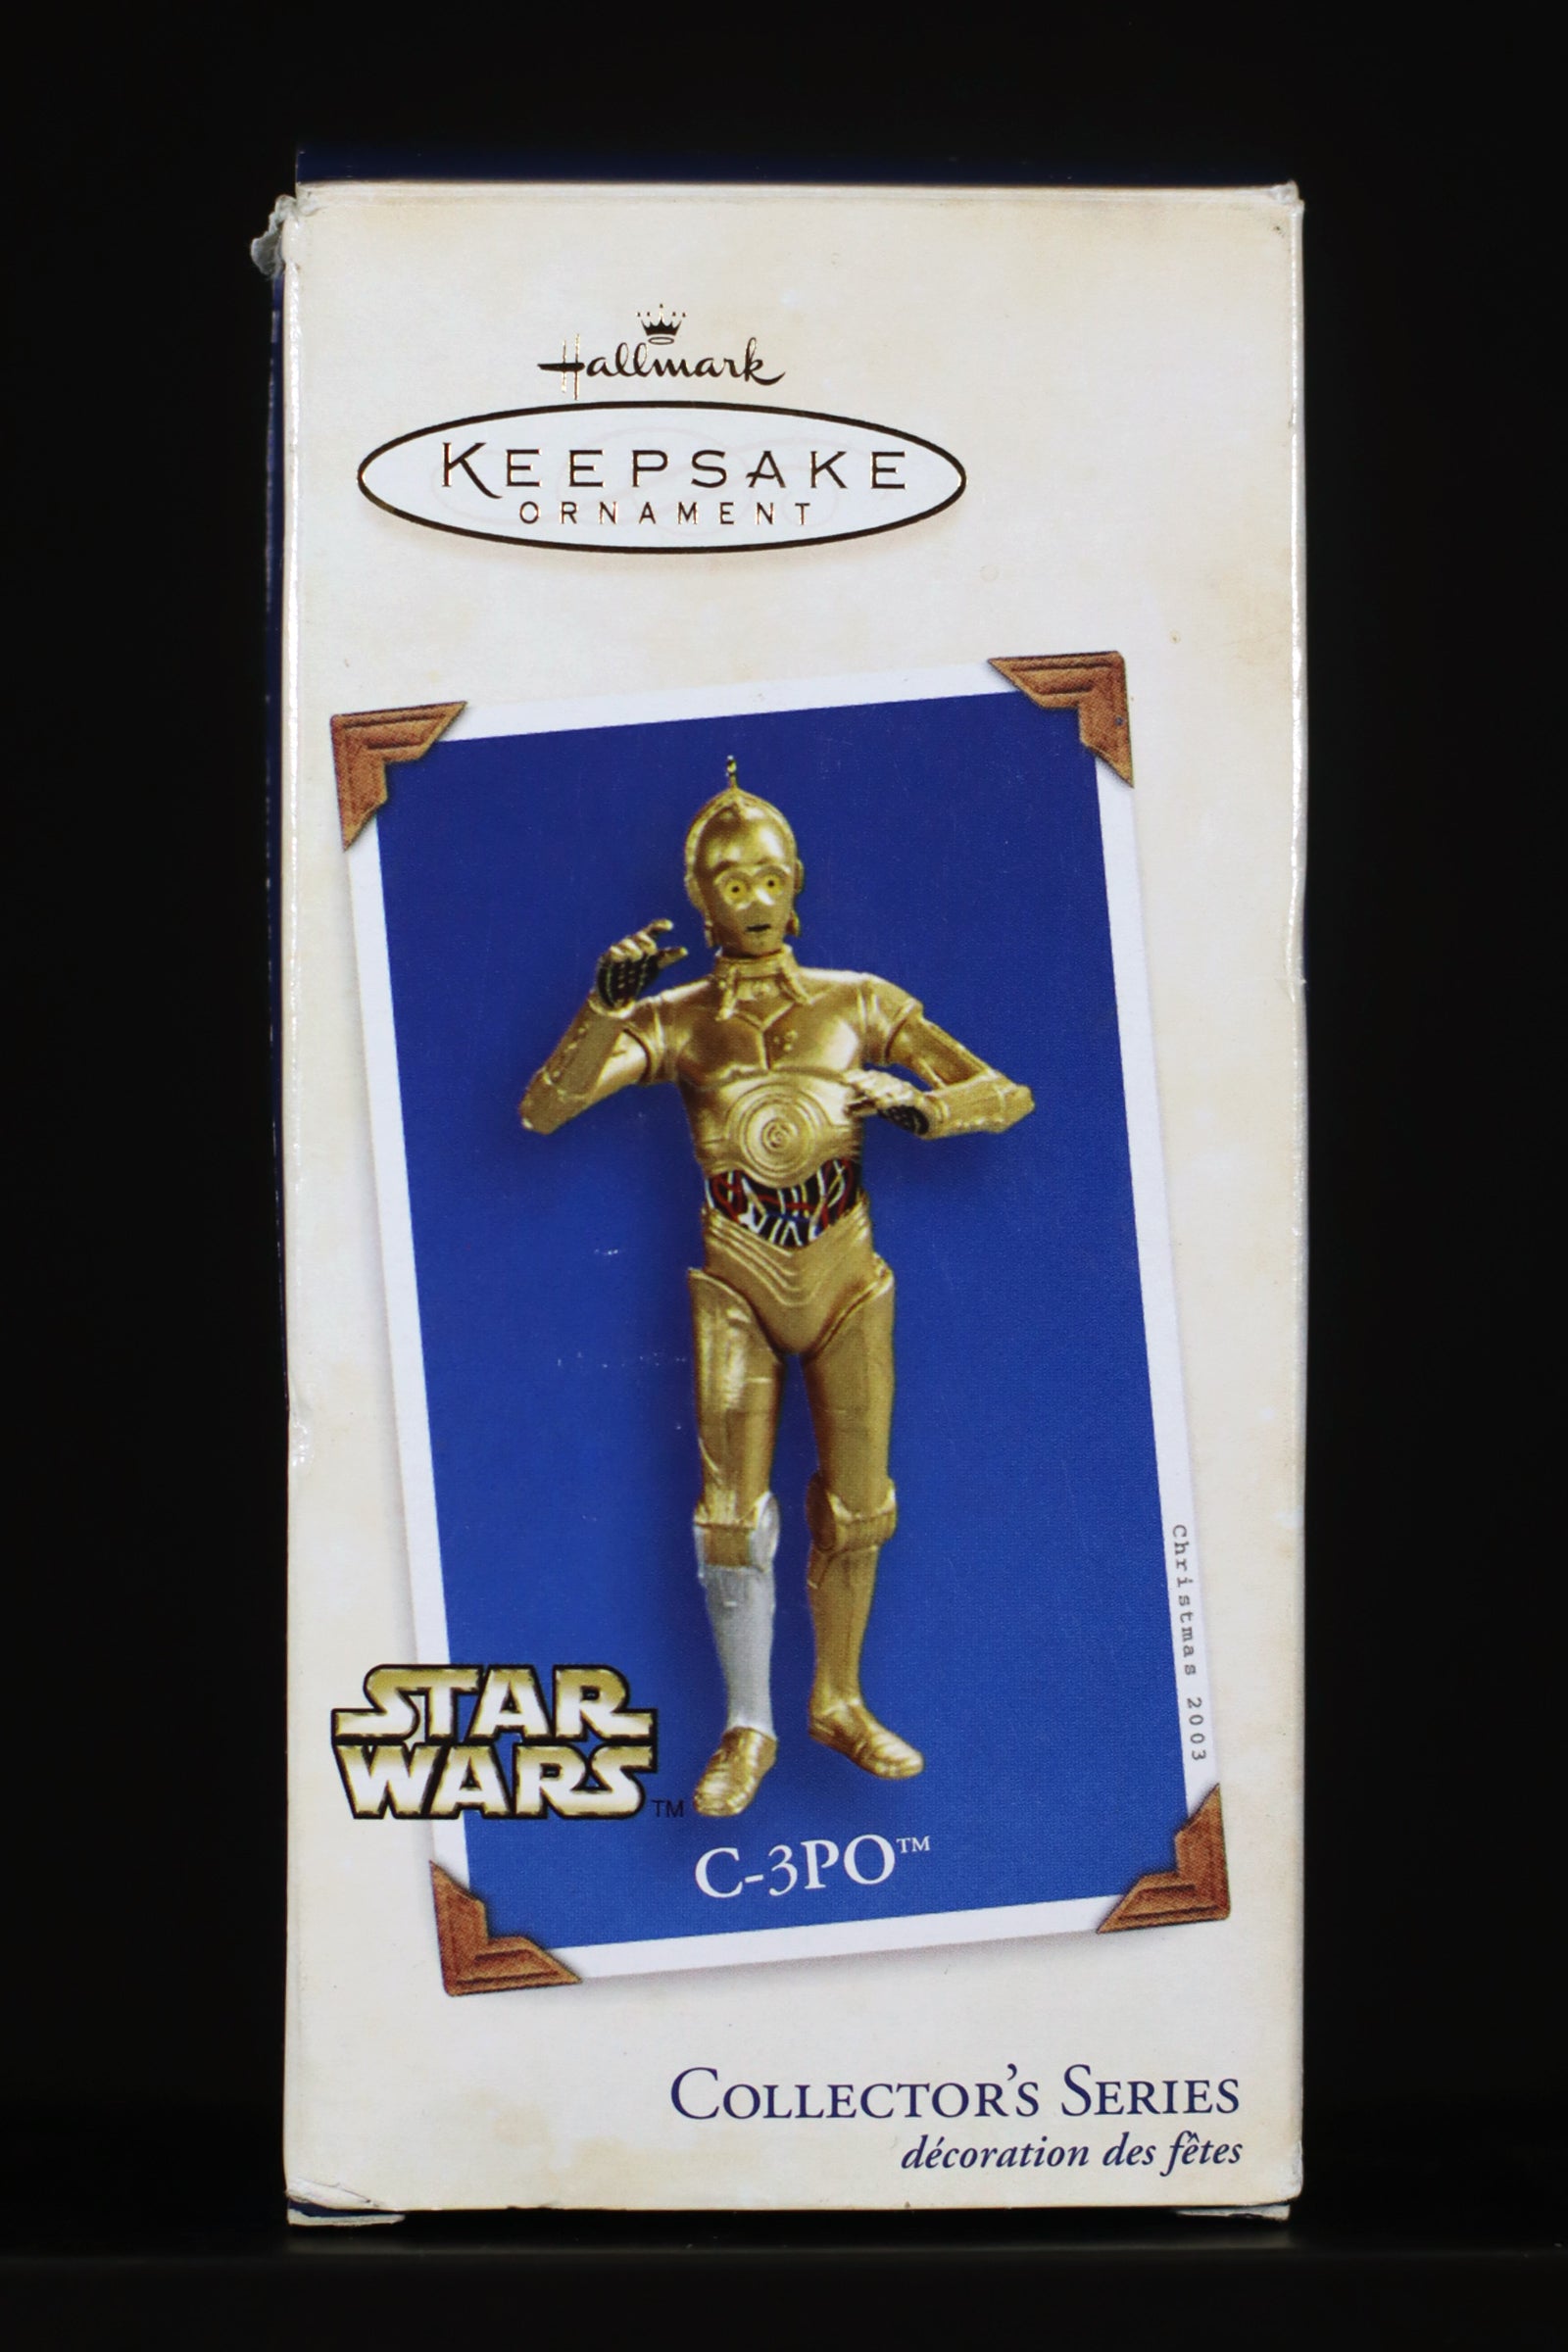 Star Wars: C-3PO Keepsake Ornament Hallmark